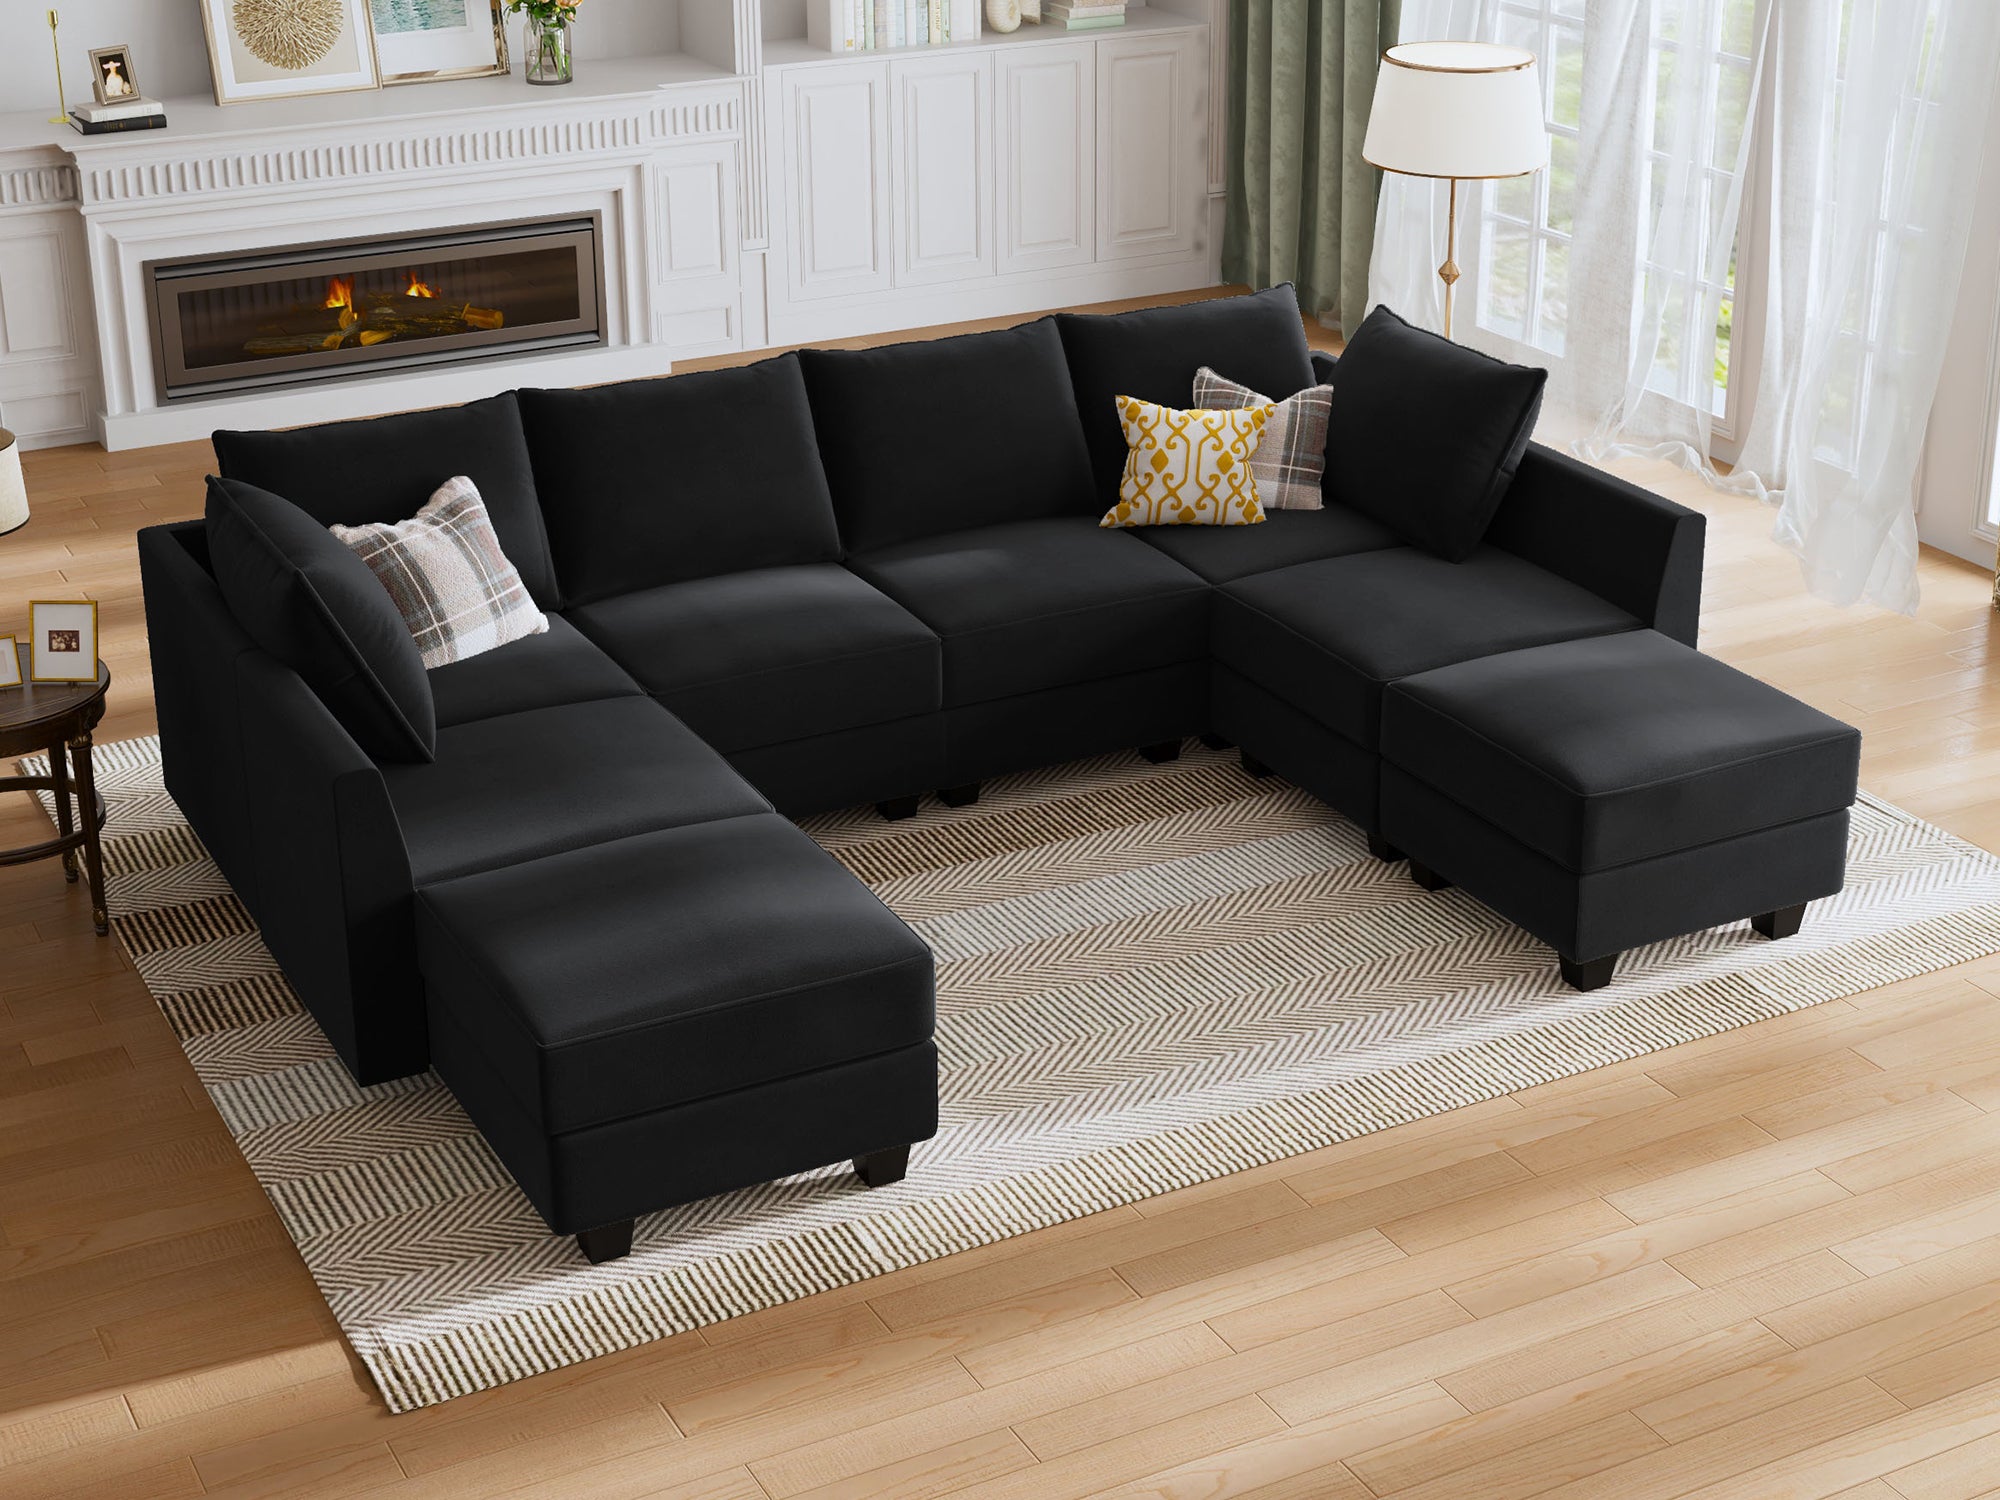 HONBAY Velvet 6-Seat Modular Sofa Bed with Storage Ottoman & Convertible Pit Sofa